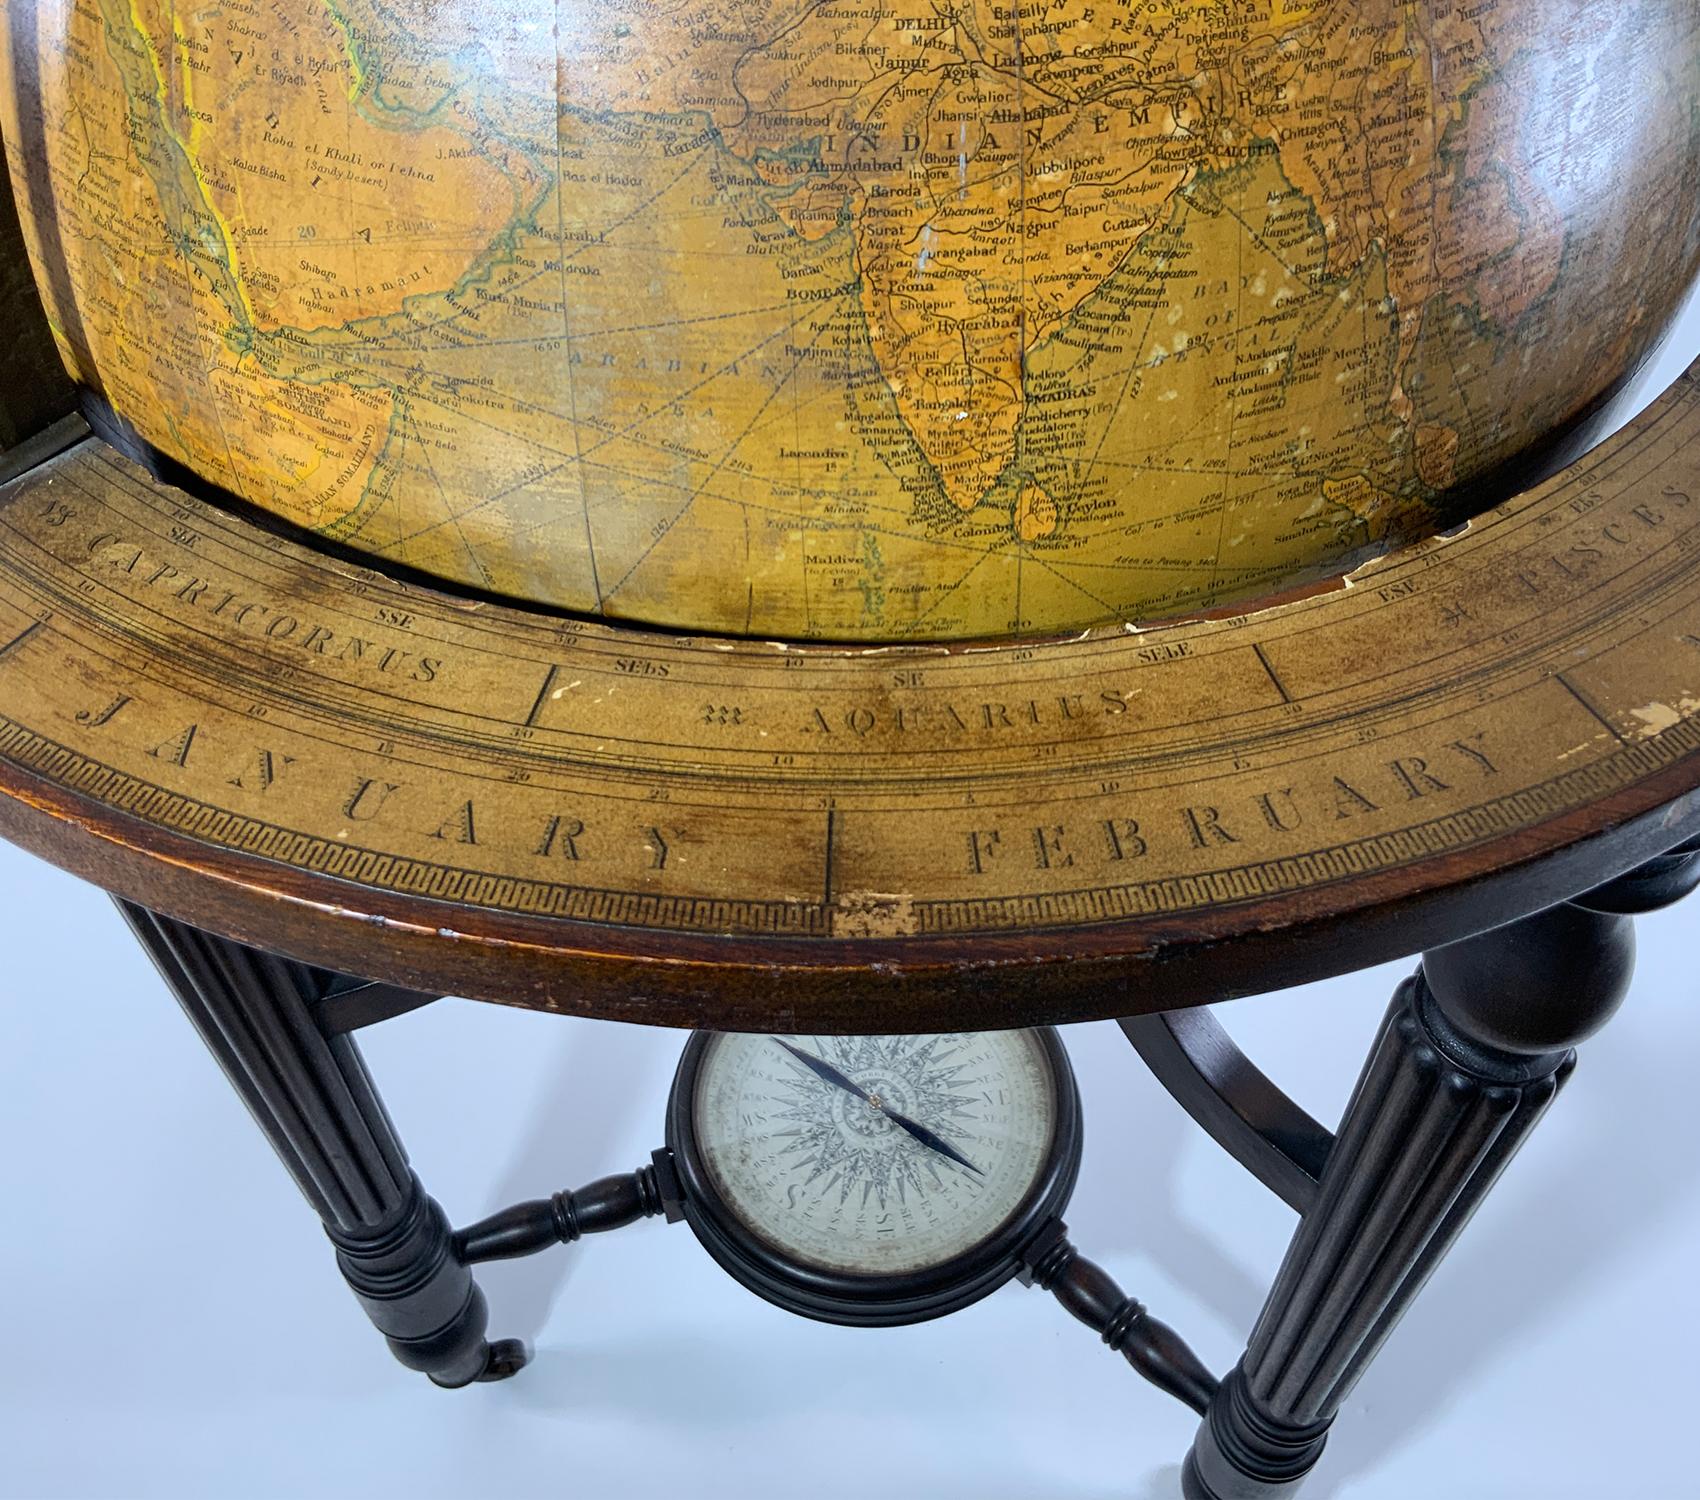 Philips Merchant Shipper's Globe, London 4